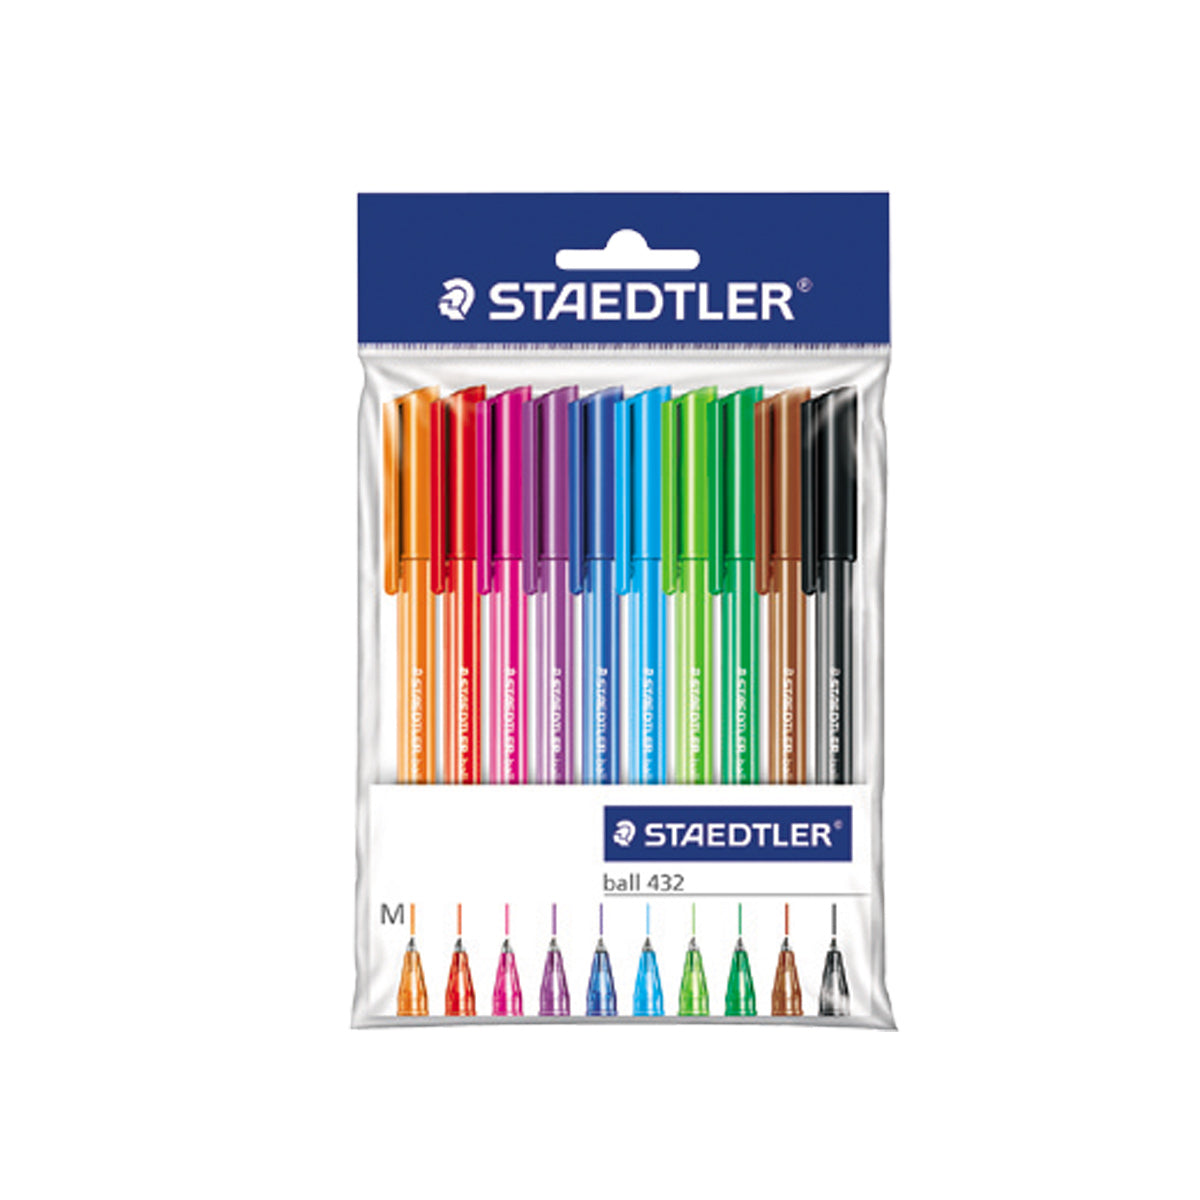 Staedtler 432M Ballpoint Pen Set of 10 Colors